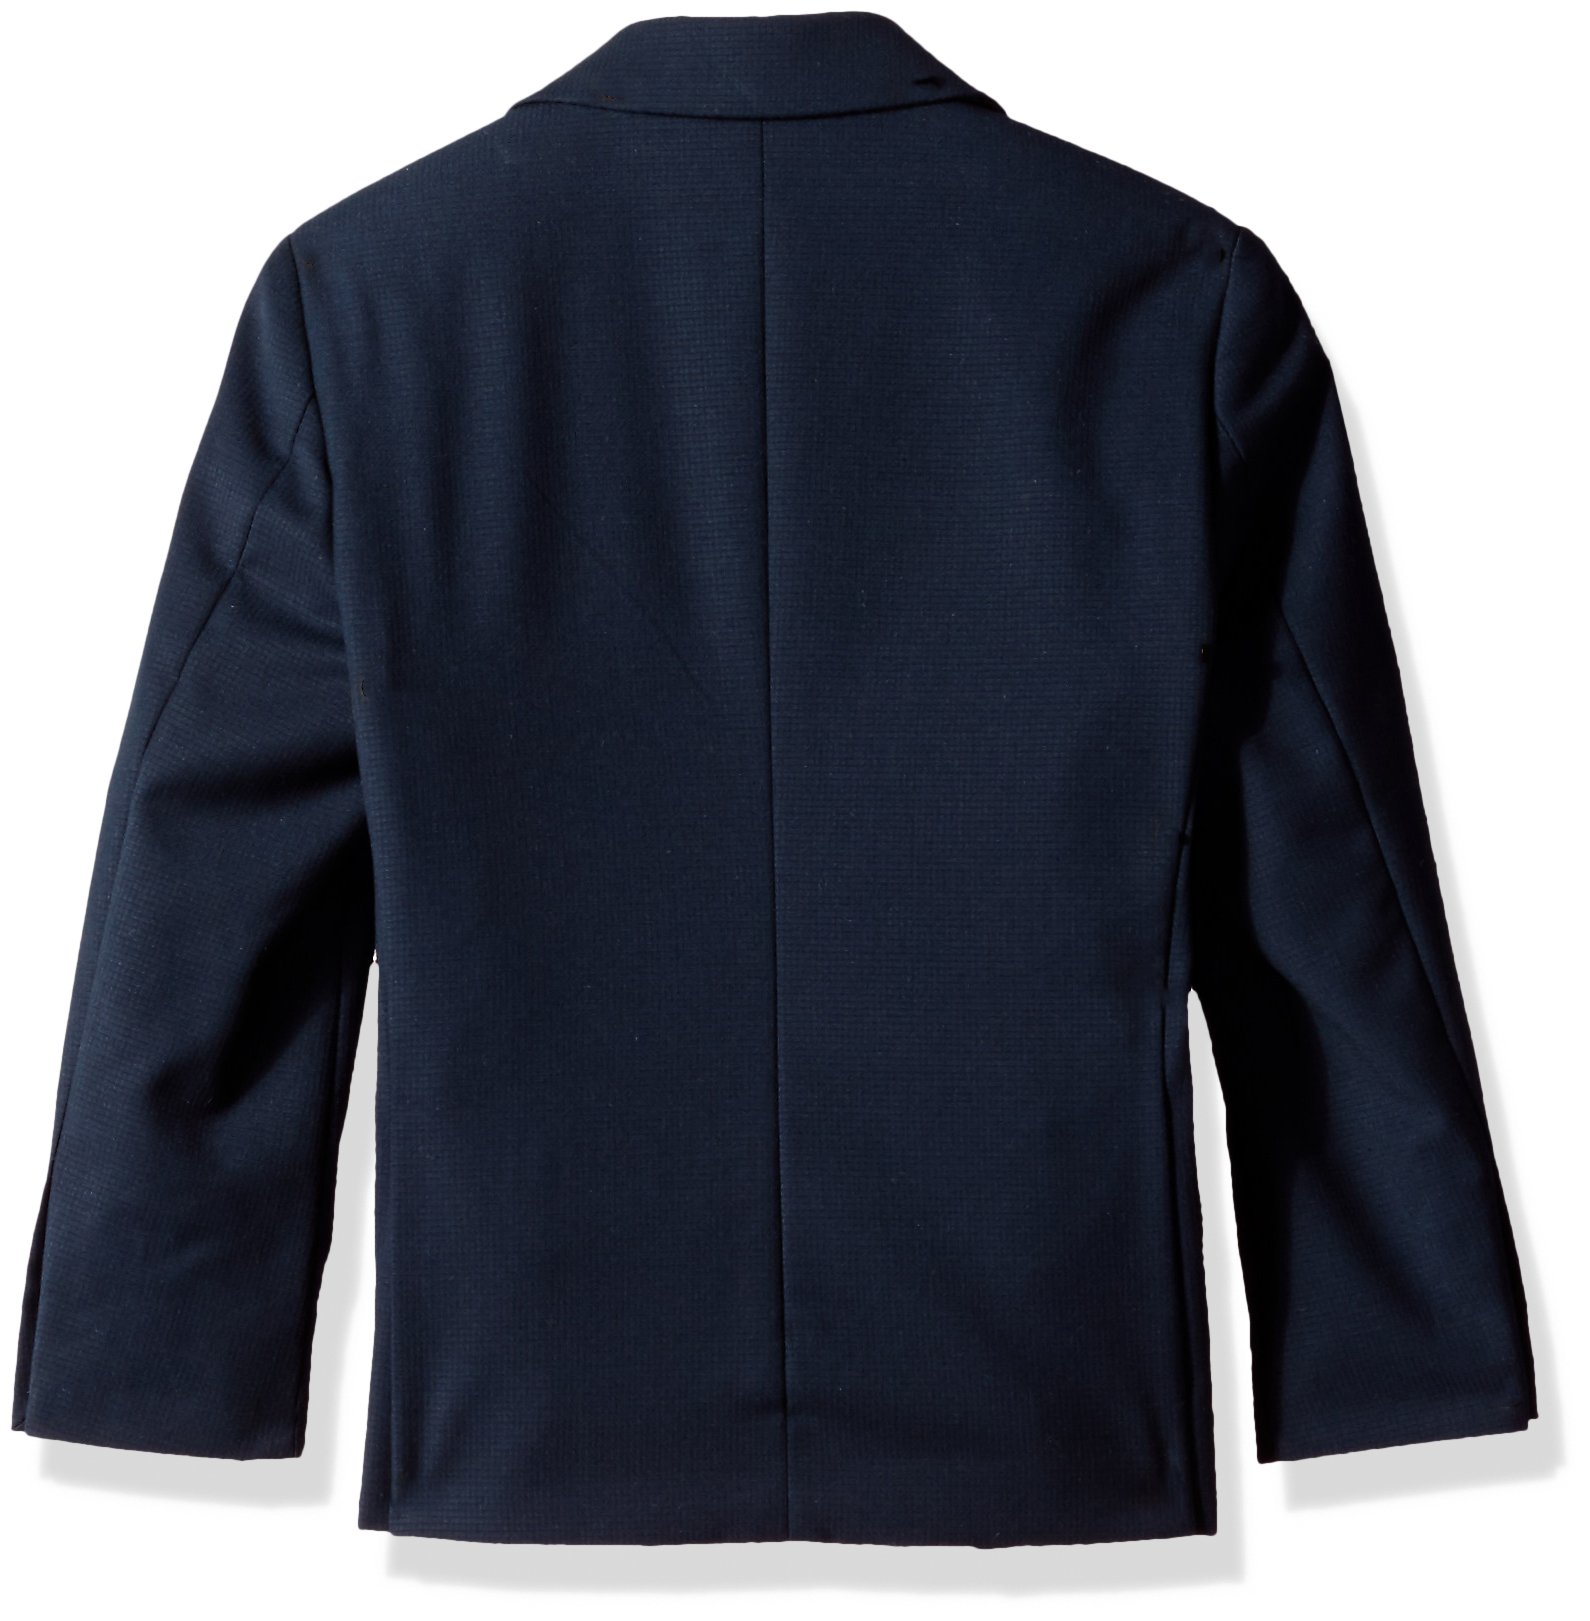 Isaac Mizrahi Boys' Textured 2pc Slim Fit Solid Suit